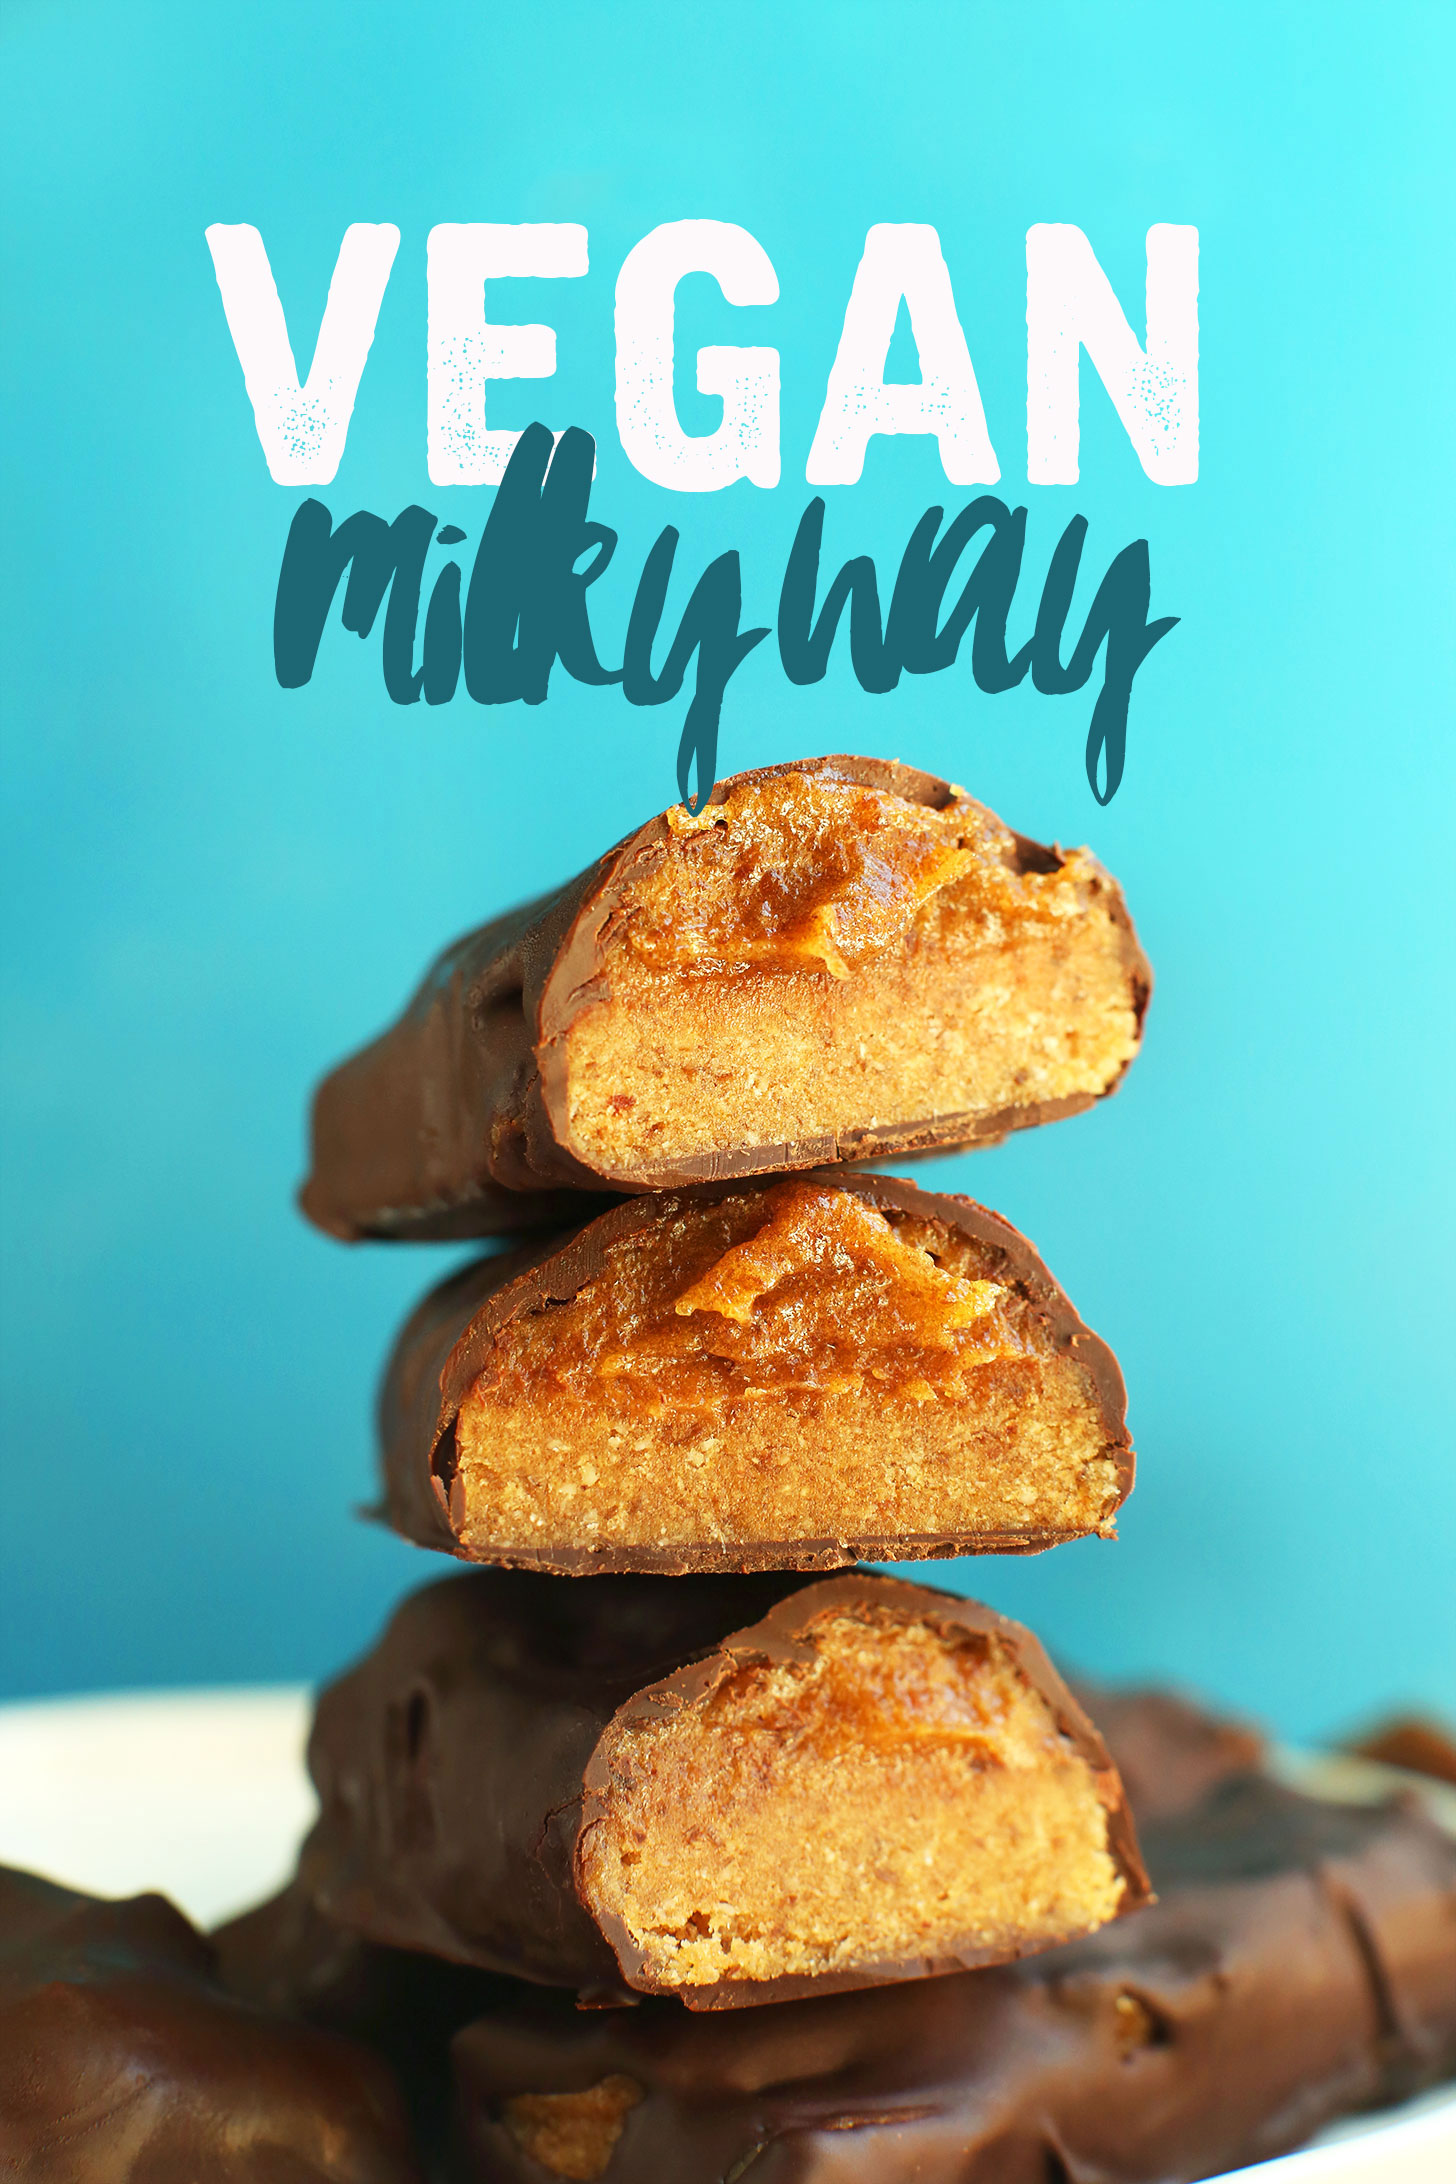 Amazing-vegan-milky-ways-6-ingredients-no-baking-required-so-delicious-vegan-glutenfree-plantbased-milkyway-recipe